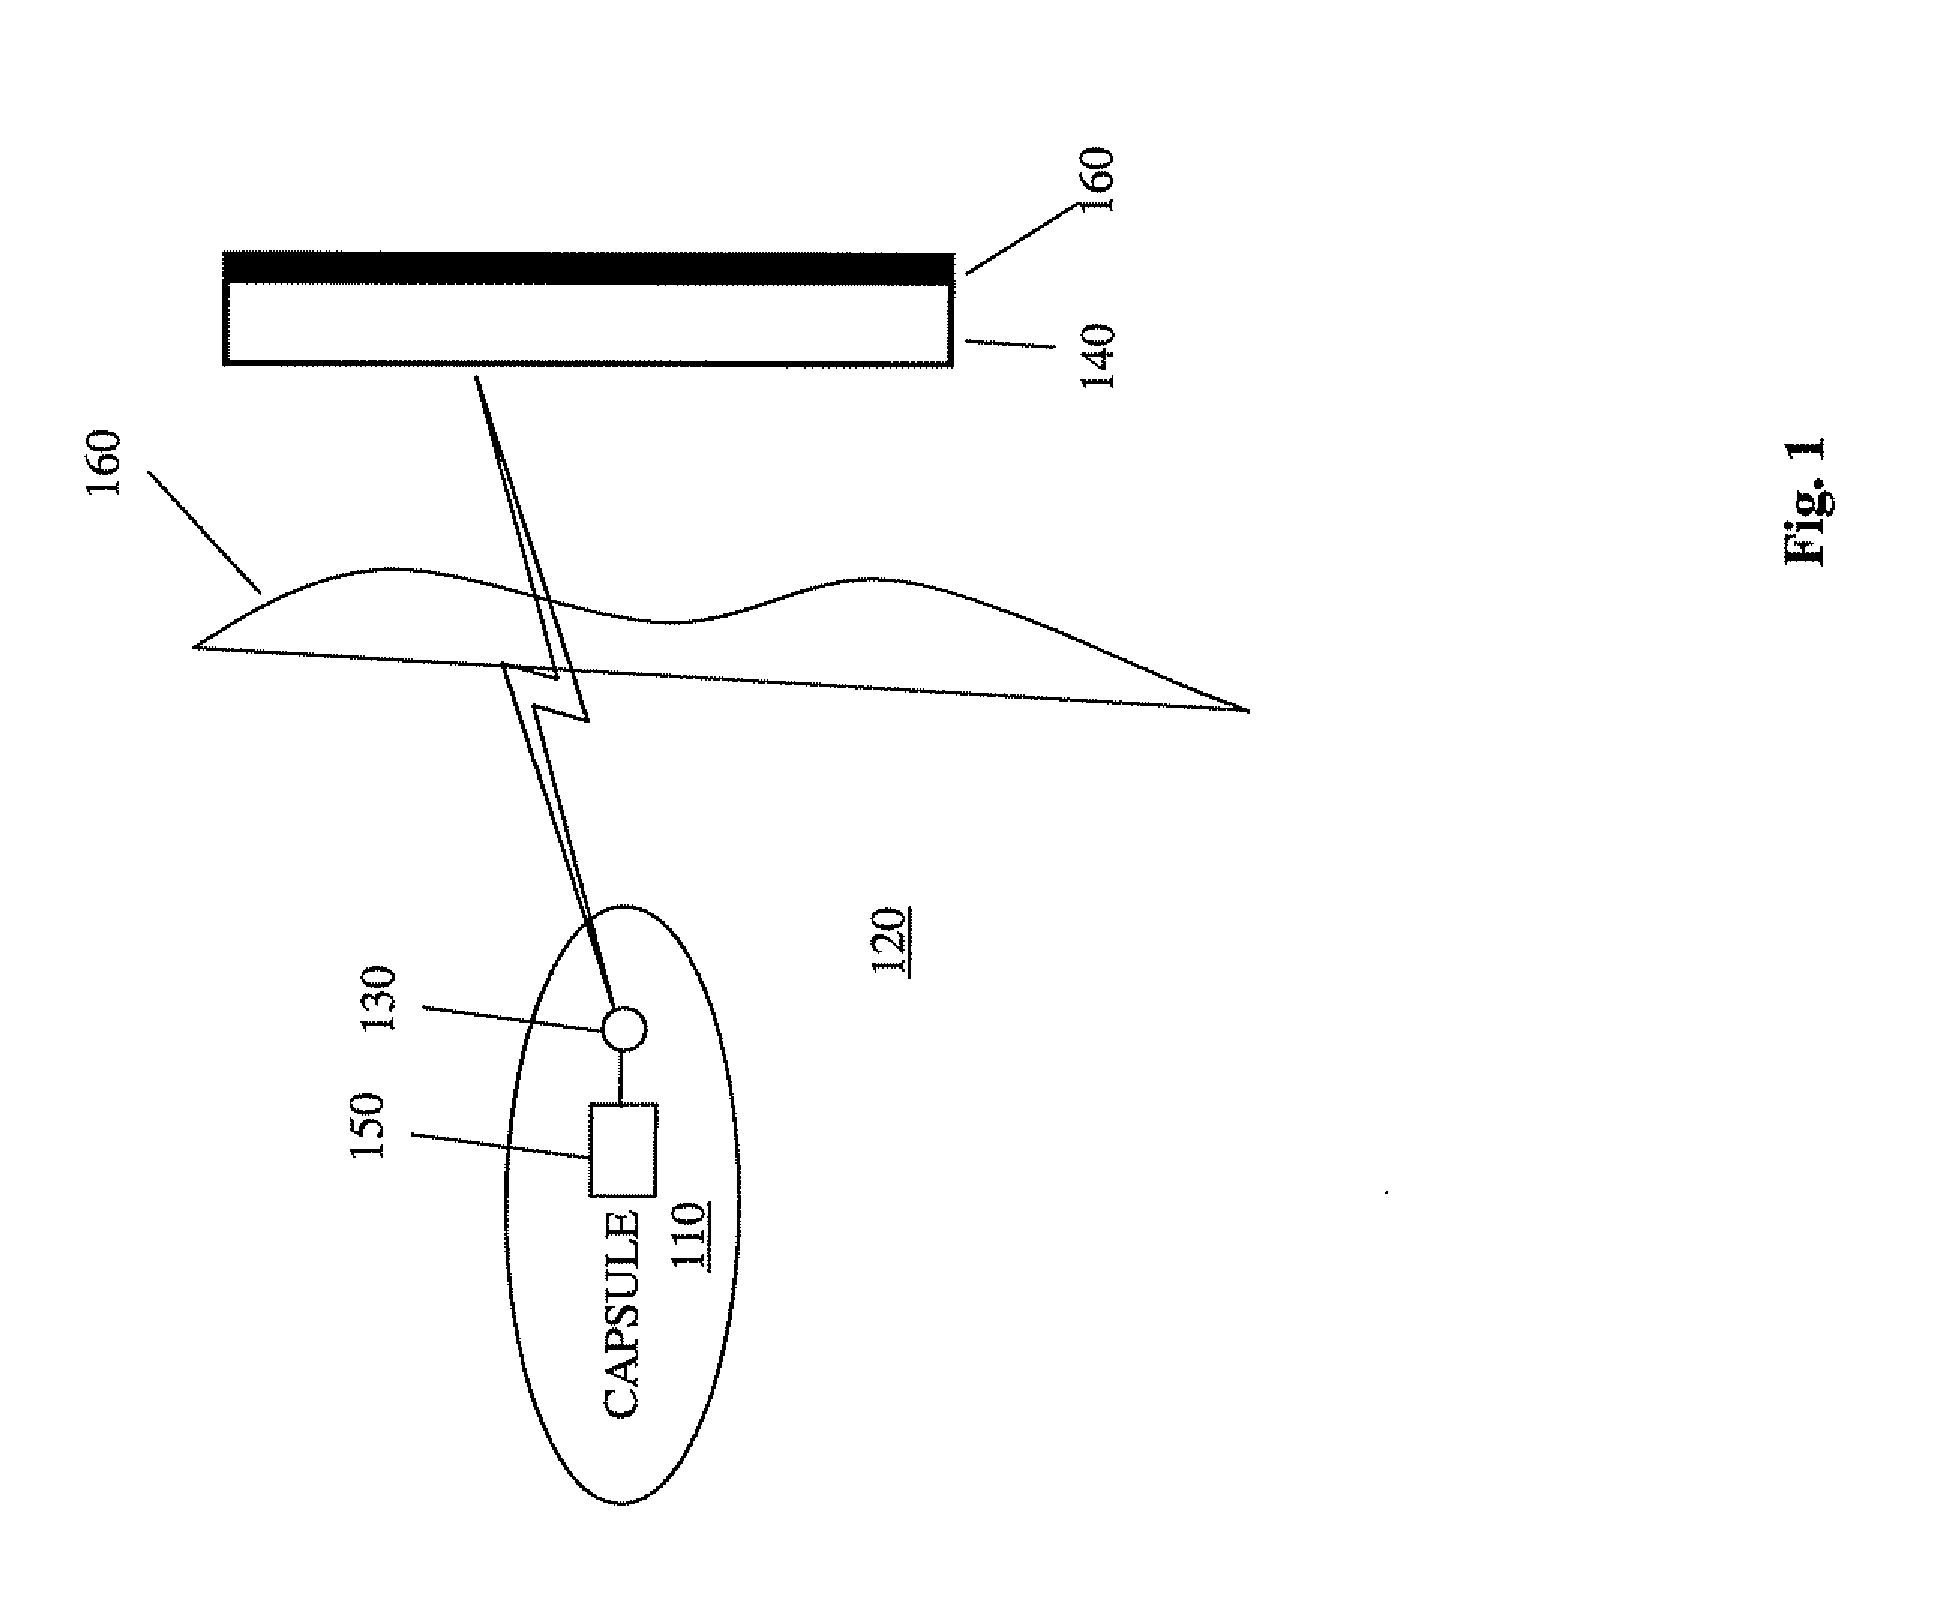  dual polarized dipole wearable antenna